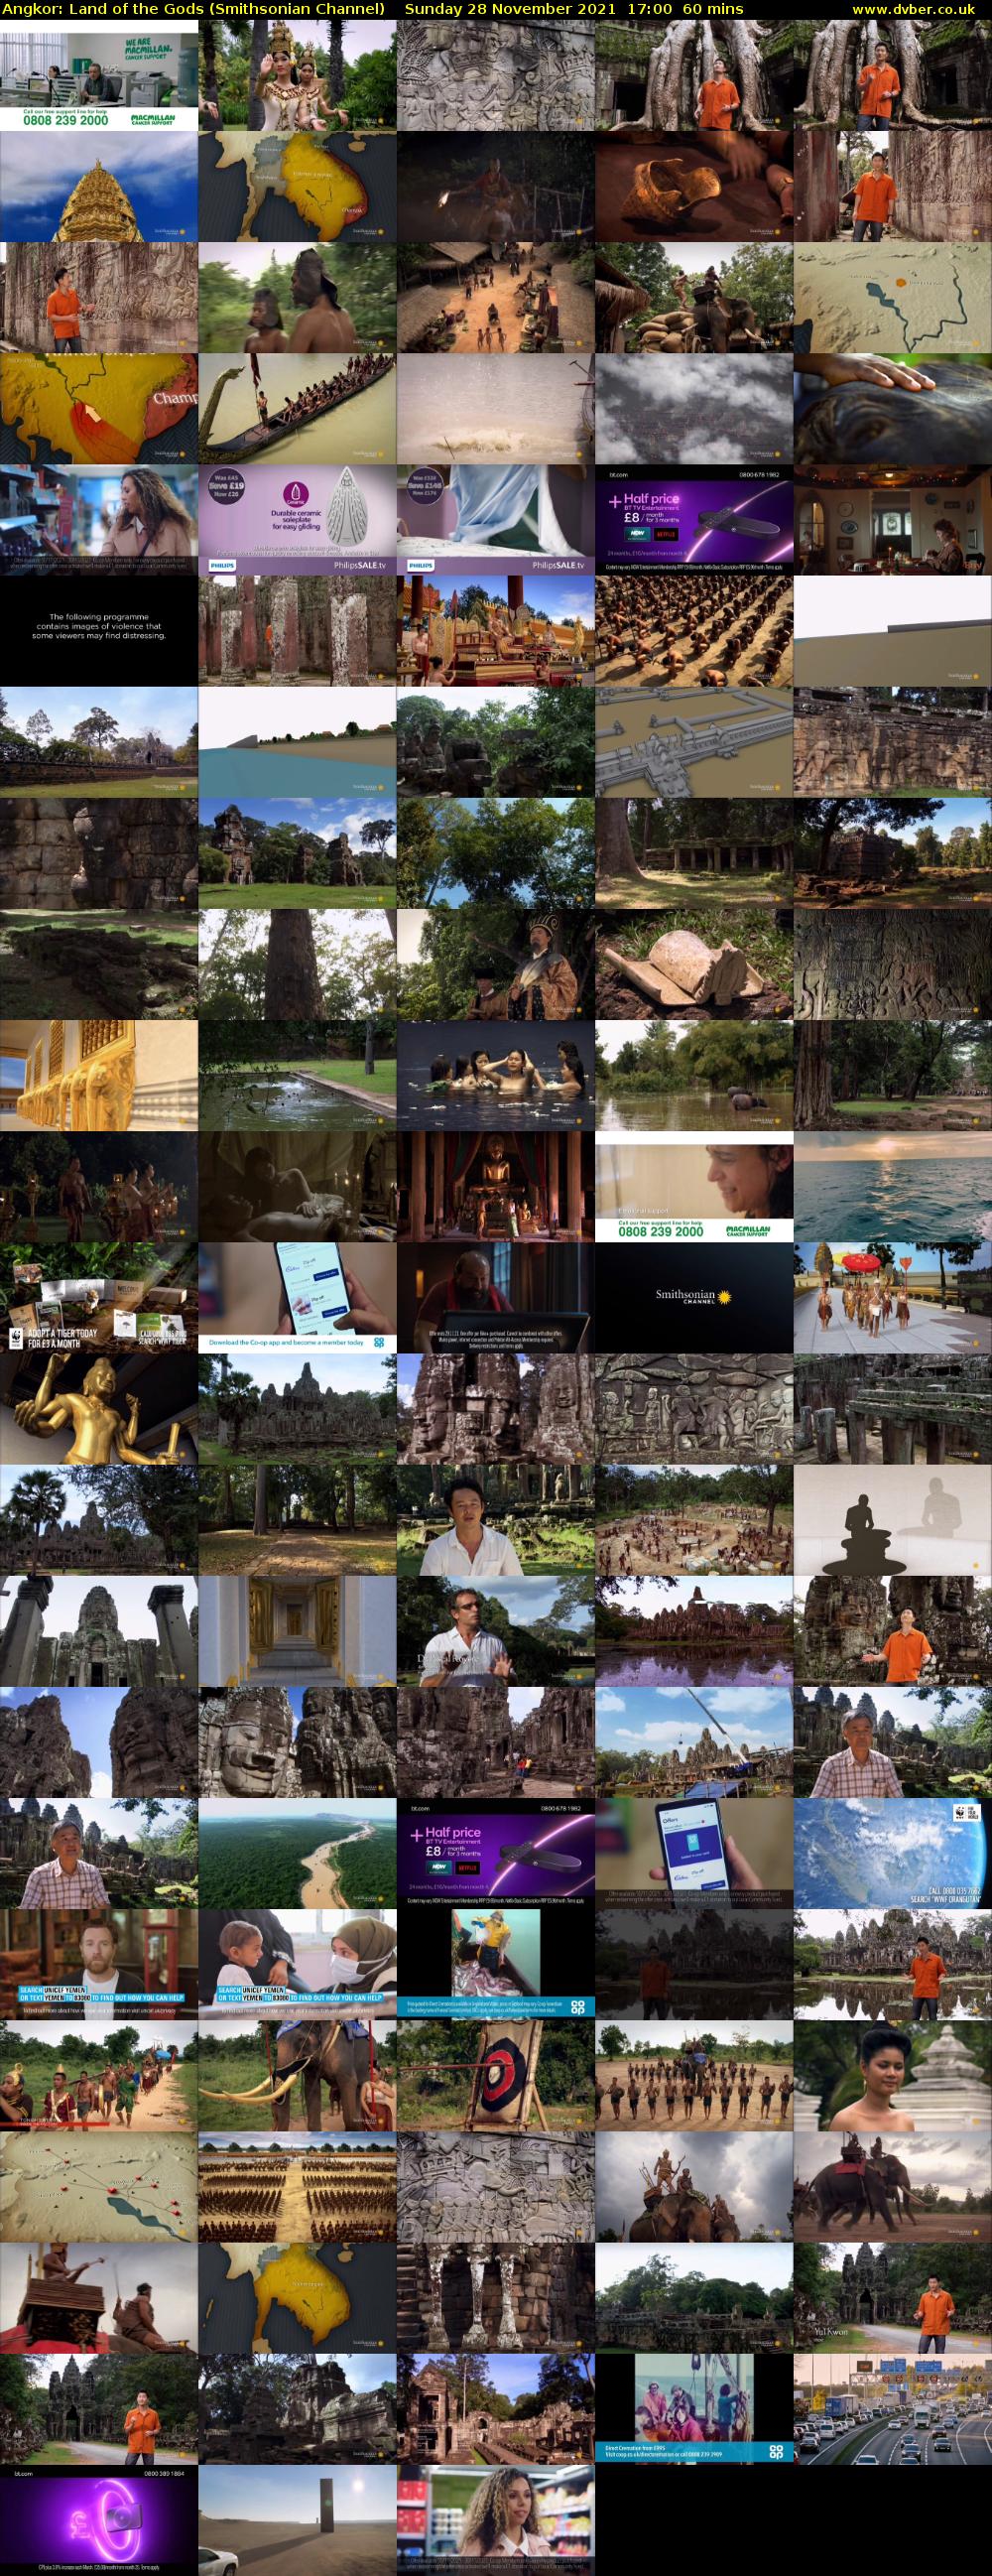 Angkor: Land of the Gods (Smithsonian Channel) Sunday 28 November 2021 17:00 - 18:00